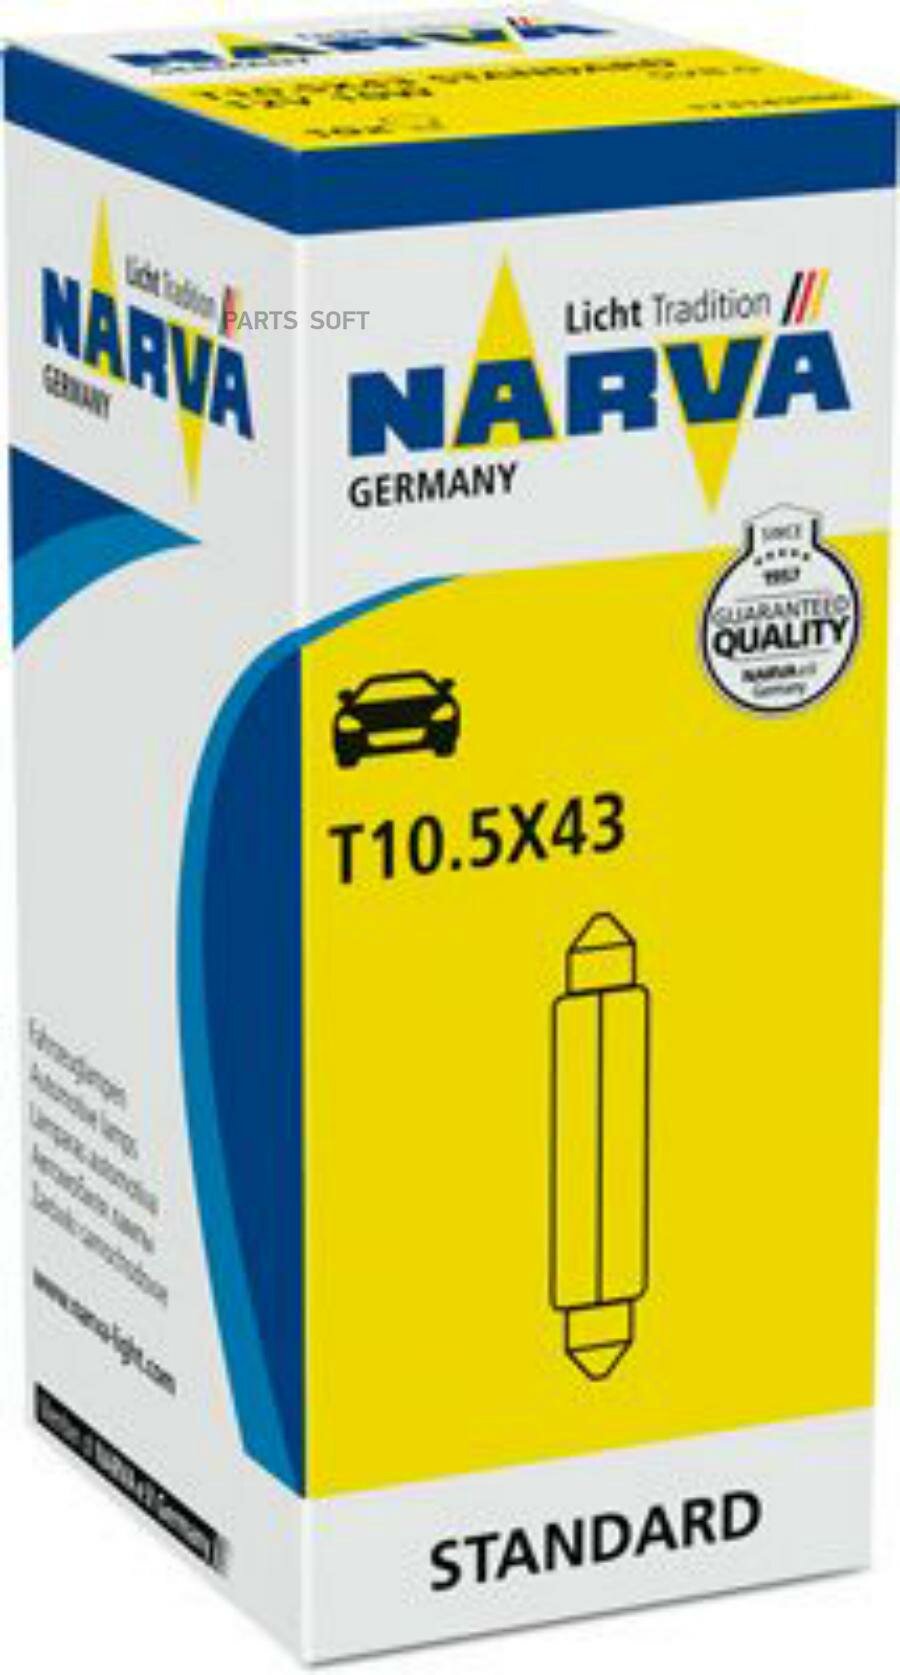 NARVA Лампа Fest T105x43 12V 10W SV85 min10